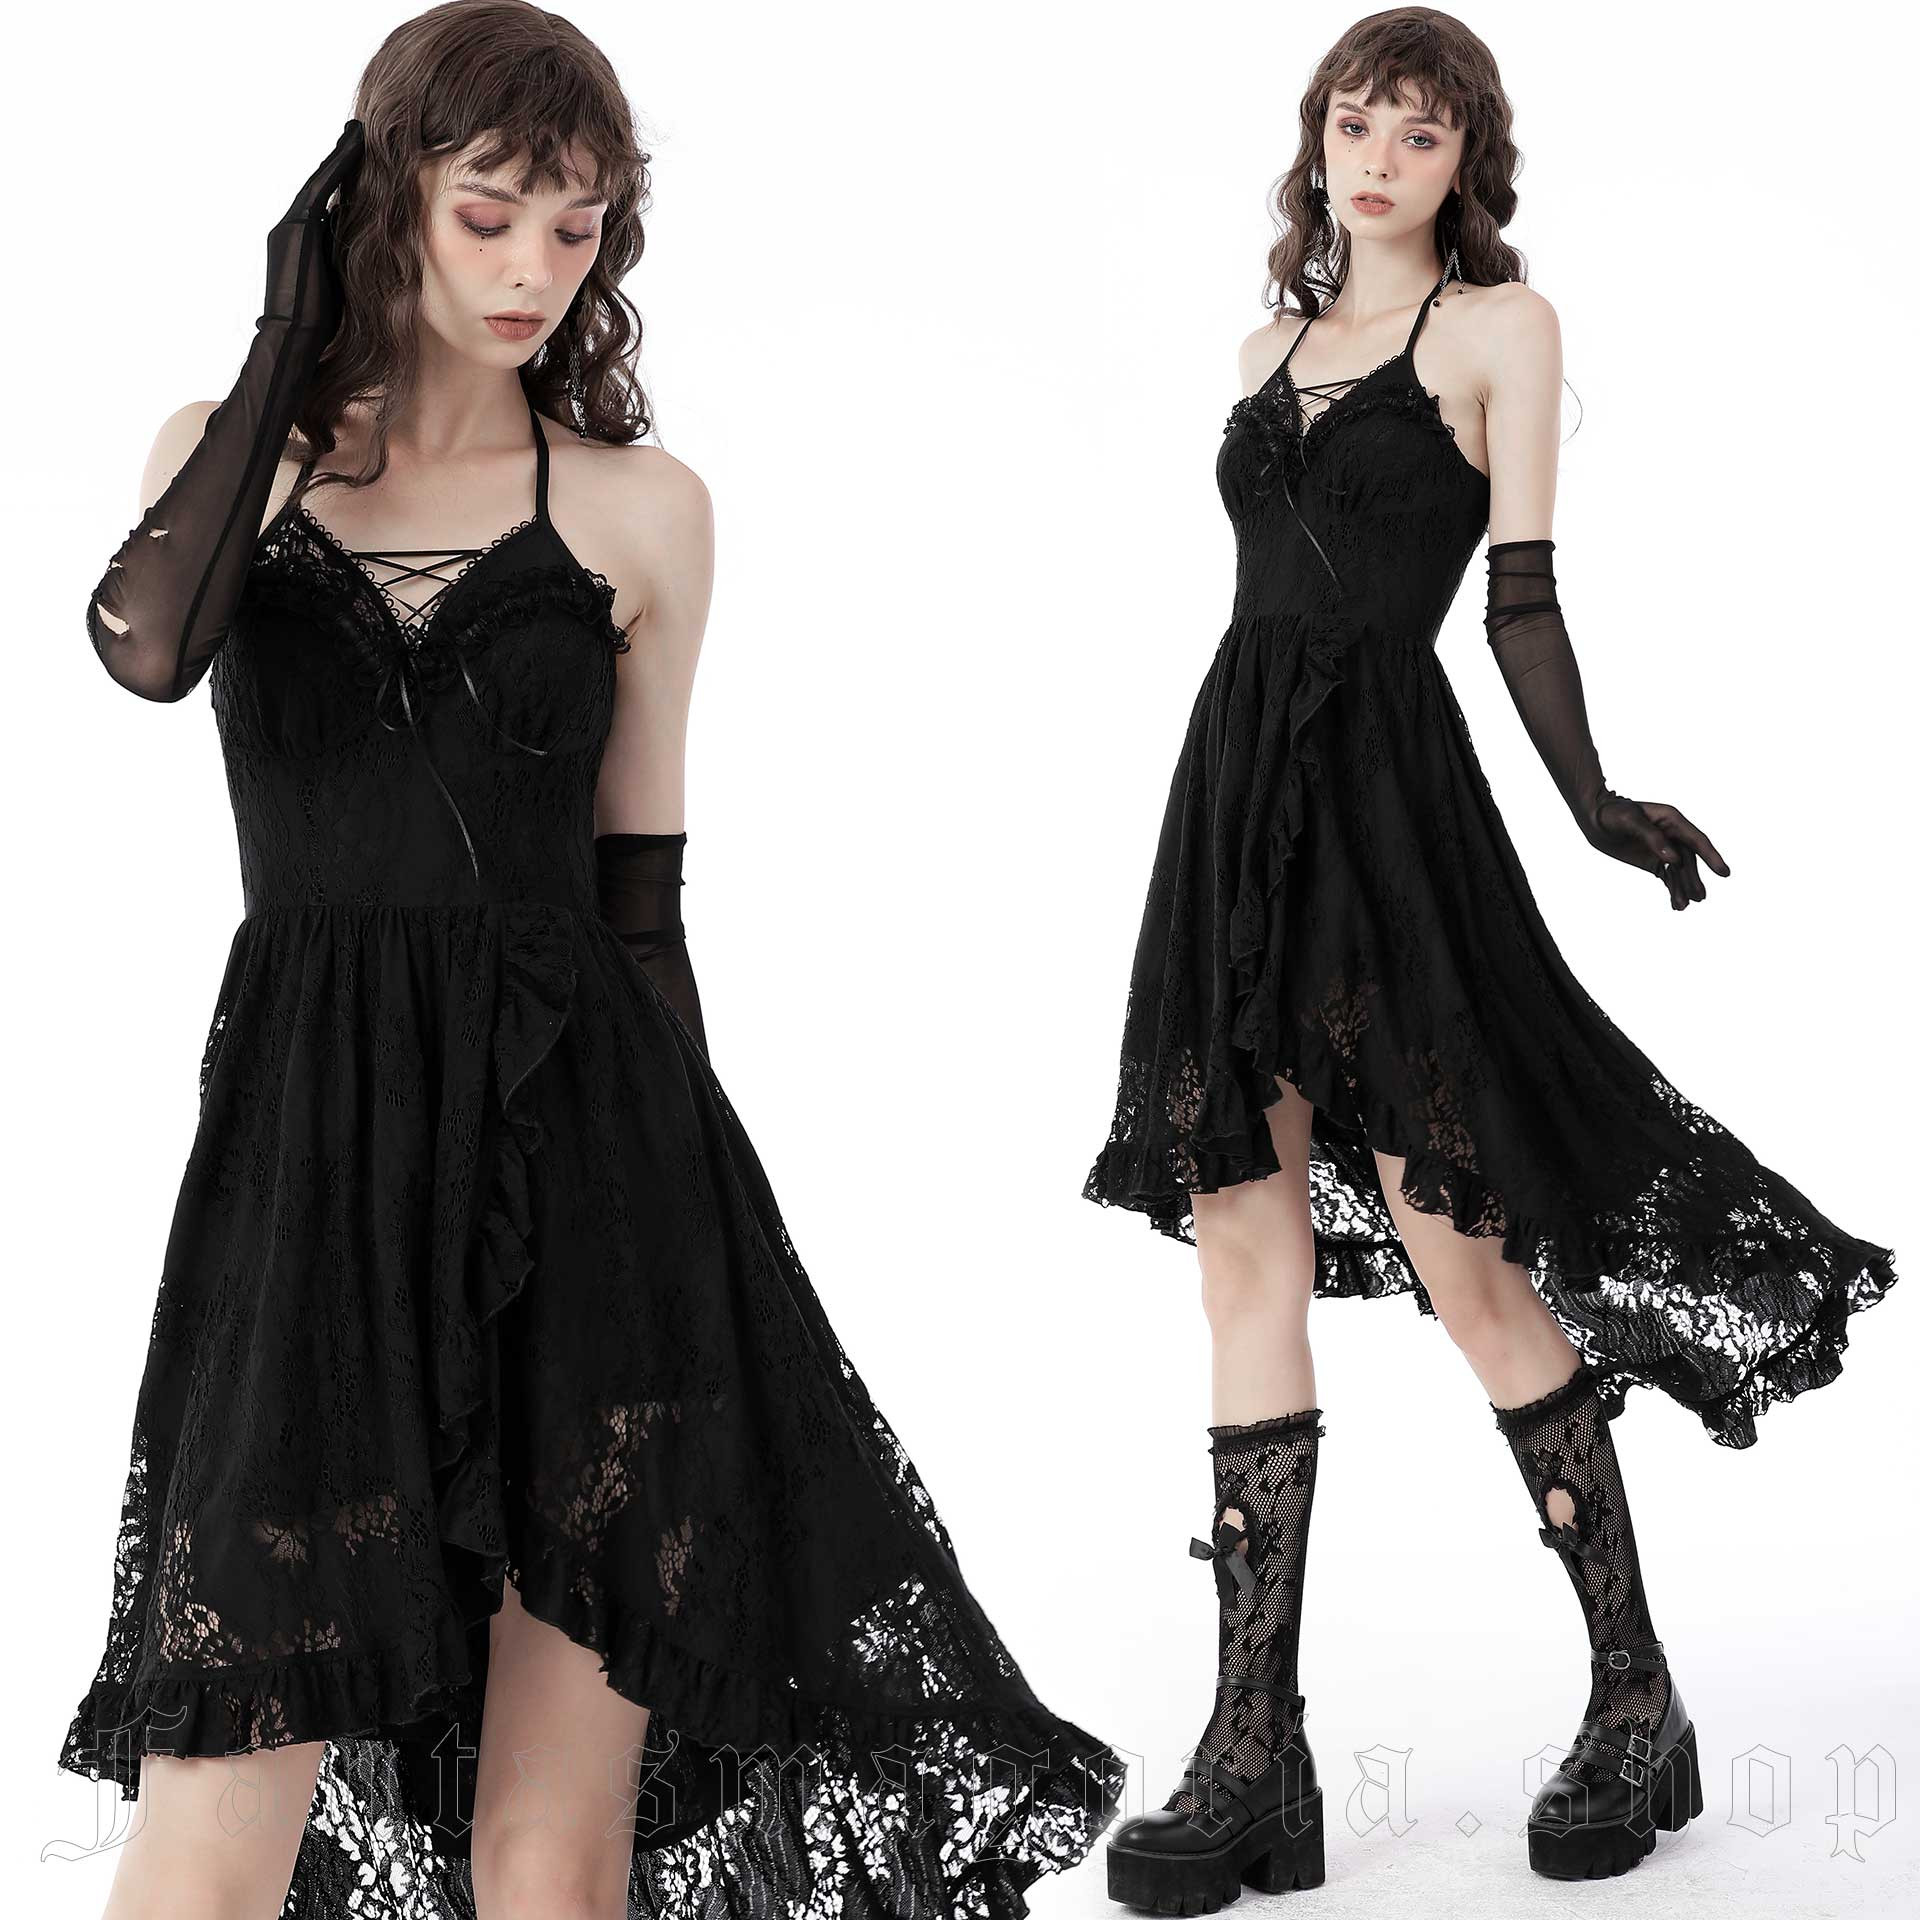 Eva Lady Black Romantic Sexy Gothic Lace Dress Top for Women 